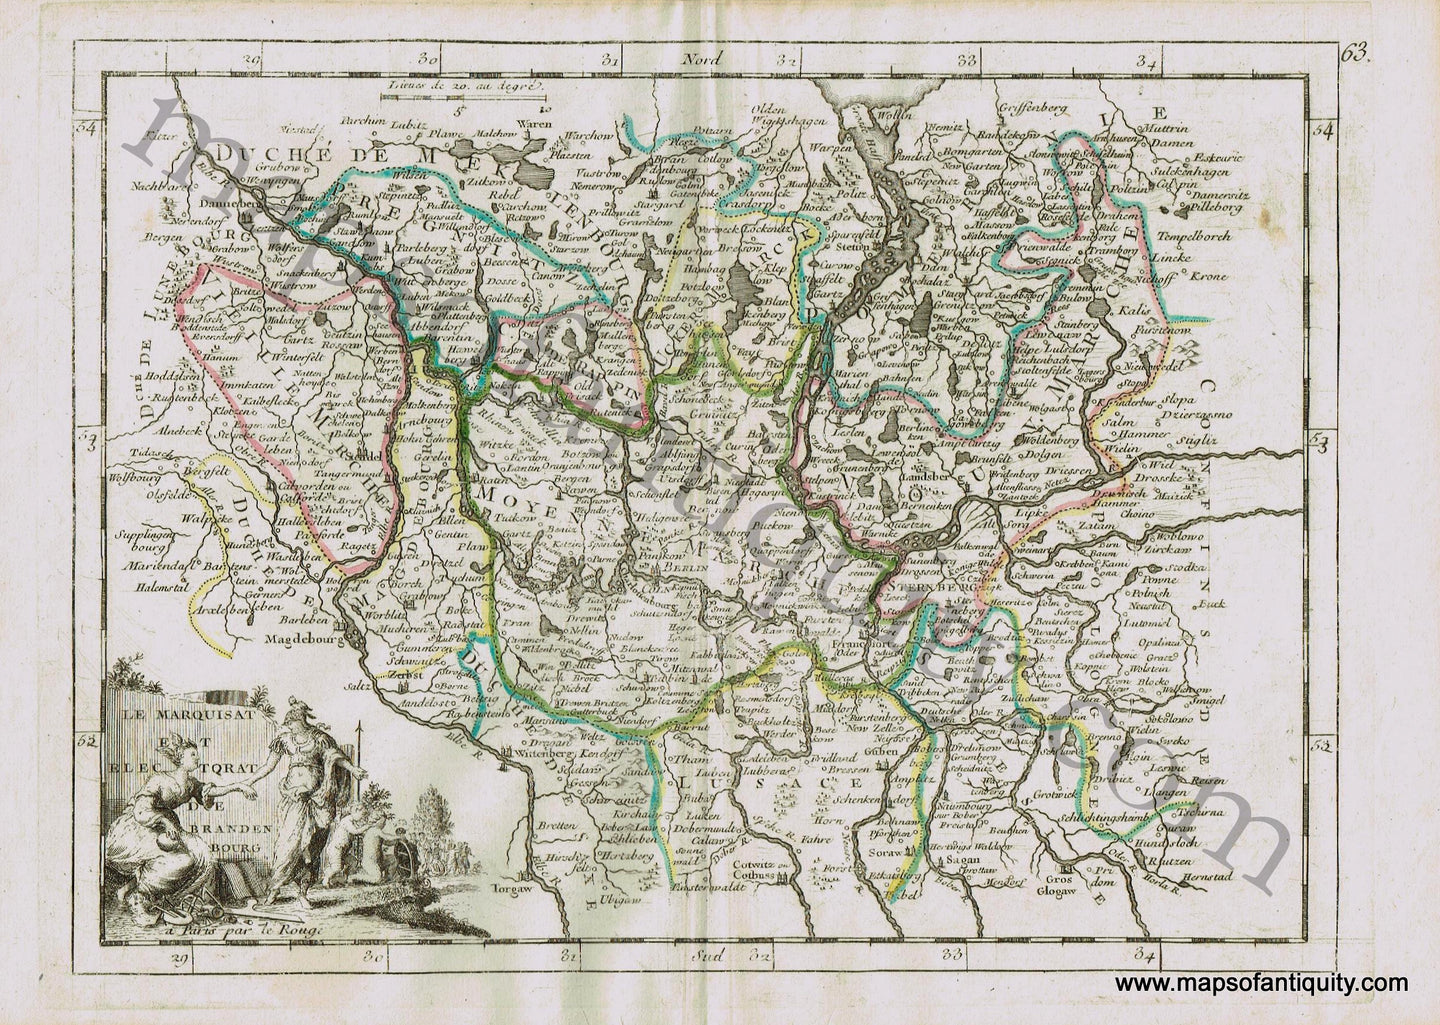 Antique-Hand-Colored-Map-Europe-Le-Marquisat-et-Electorat-de-Brandenbourg-1748-Le-Rouge-Germany-1700s-18th-century-Maps-of-Antiquity